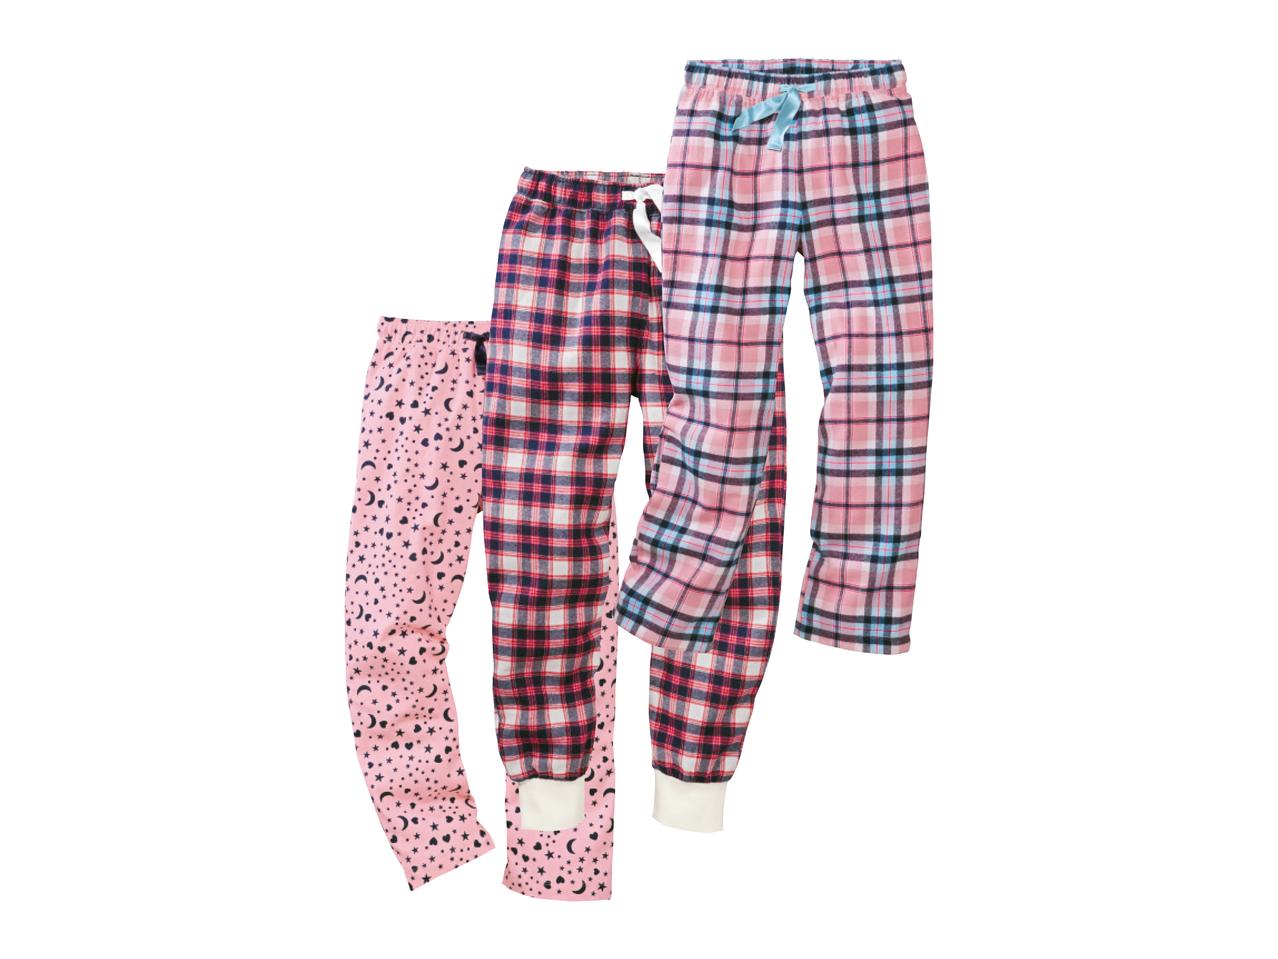 PEPPERTS Kids' Pyjama Bottoms